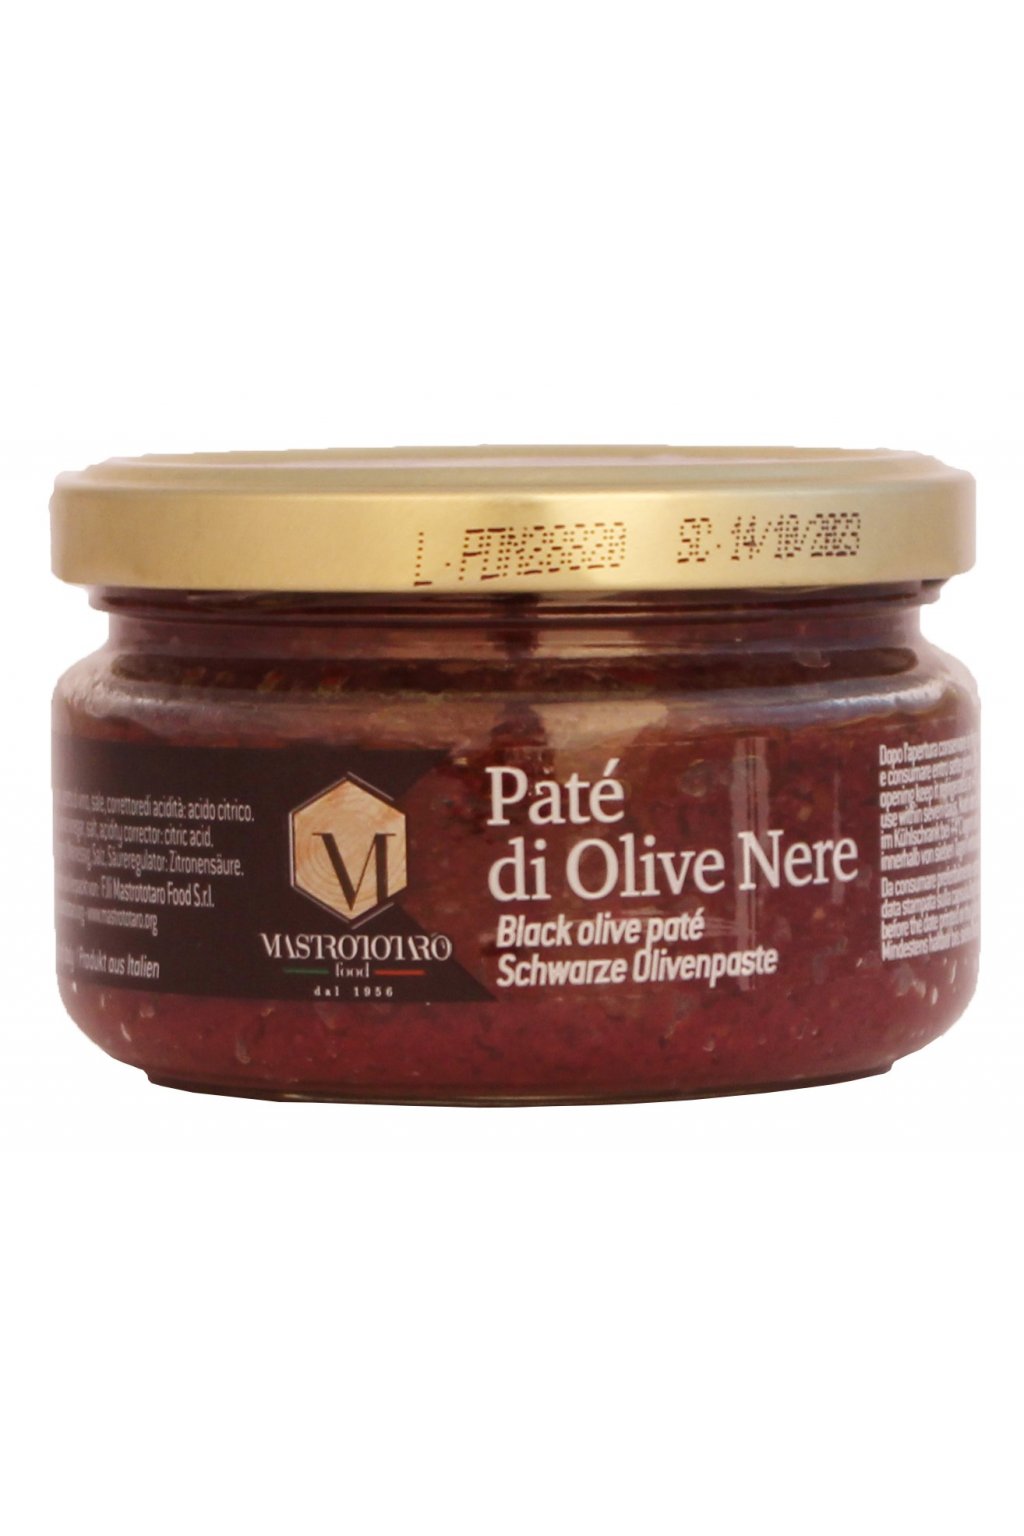 Paštika z černých oliv (Pate di Olive nere)180g